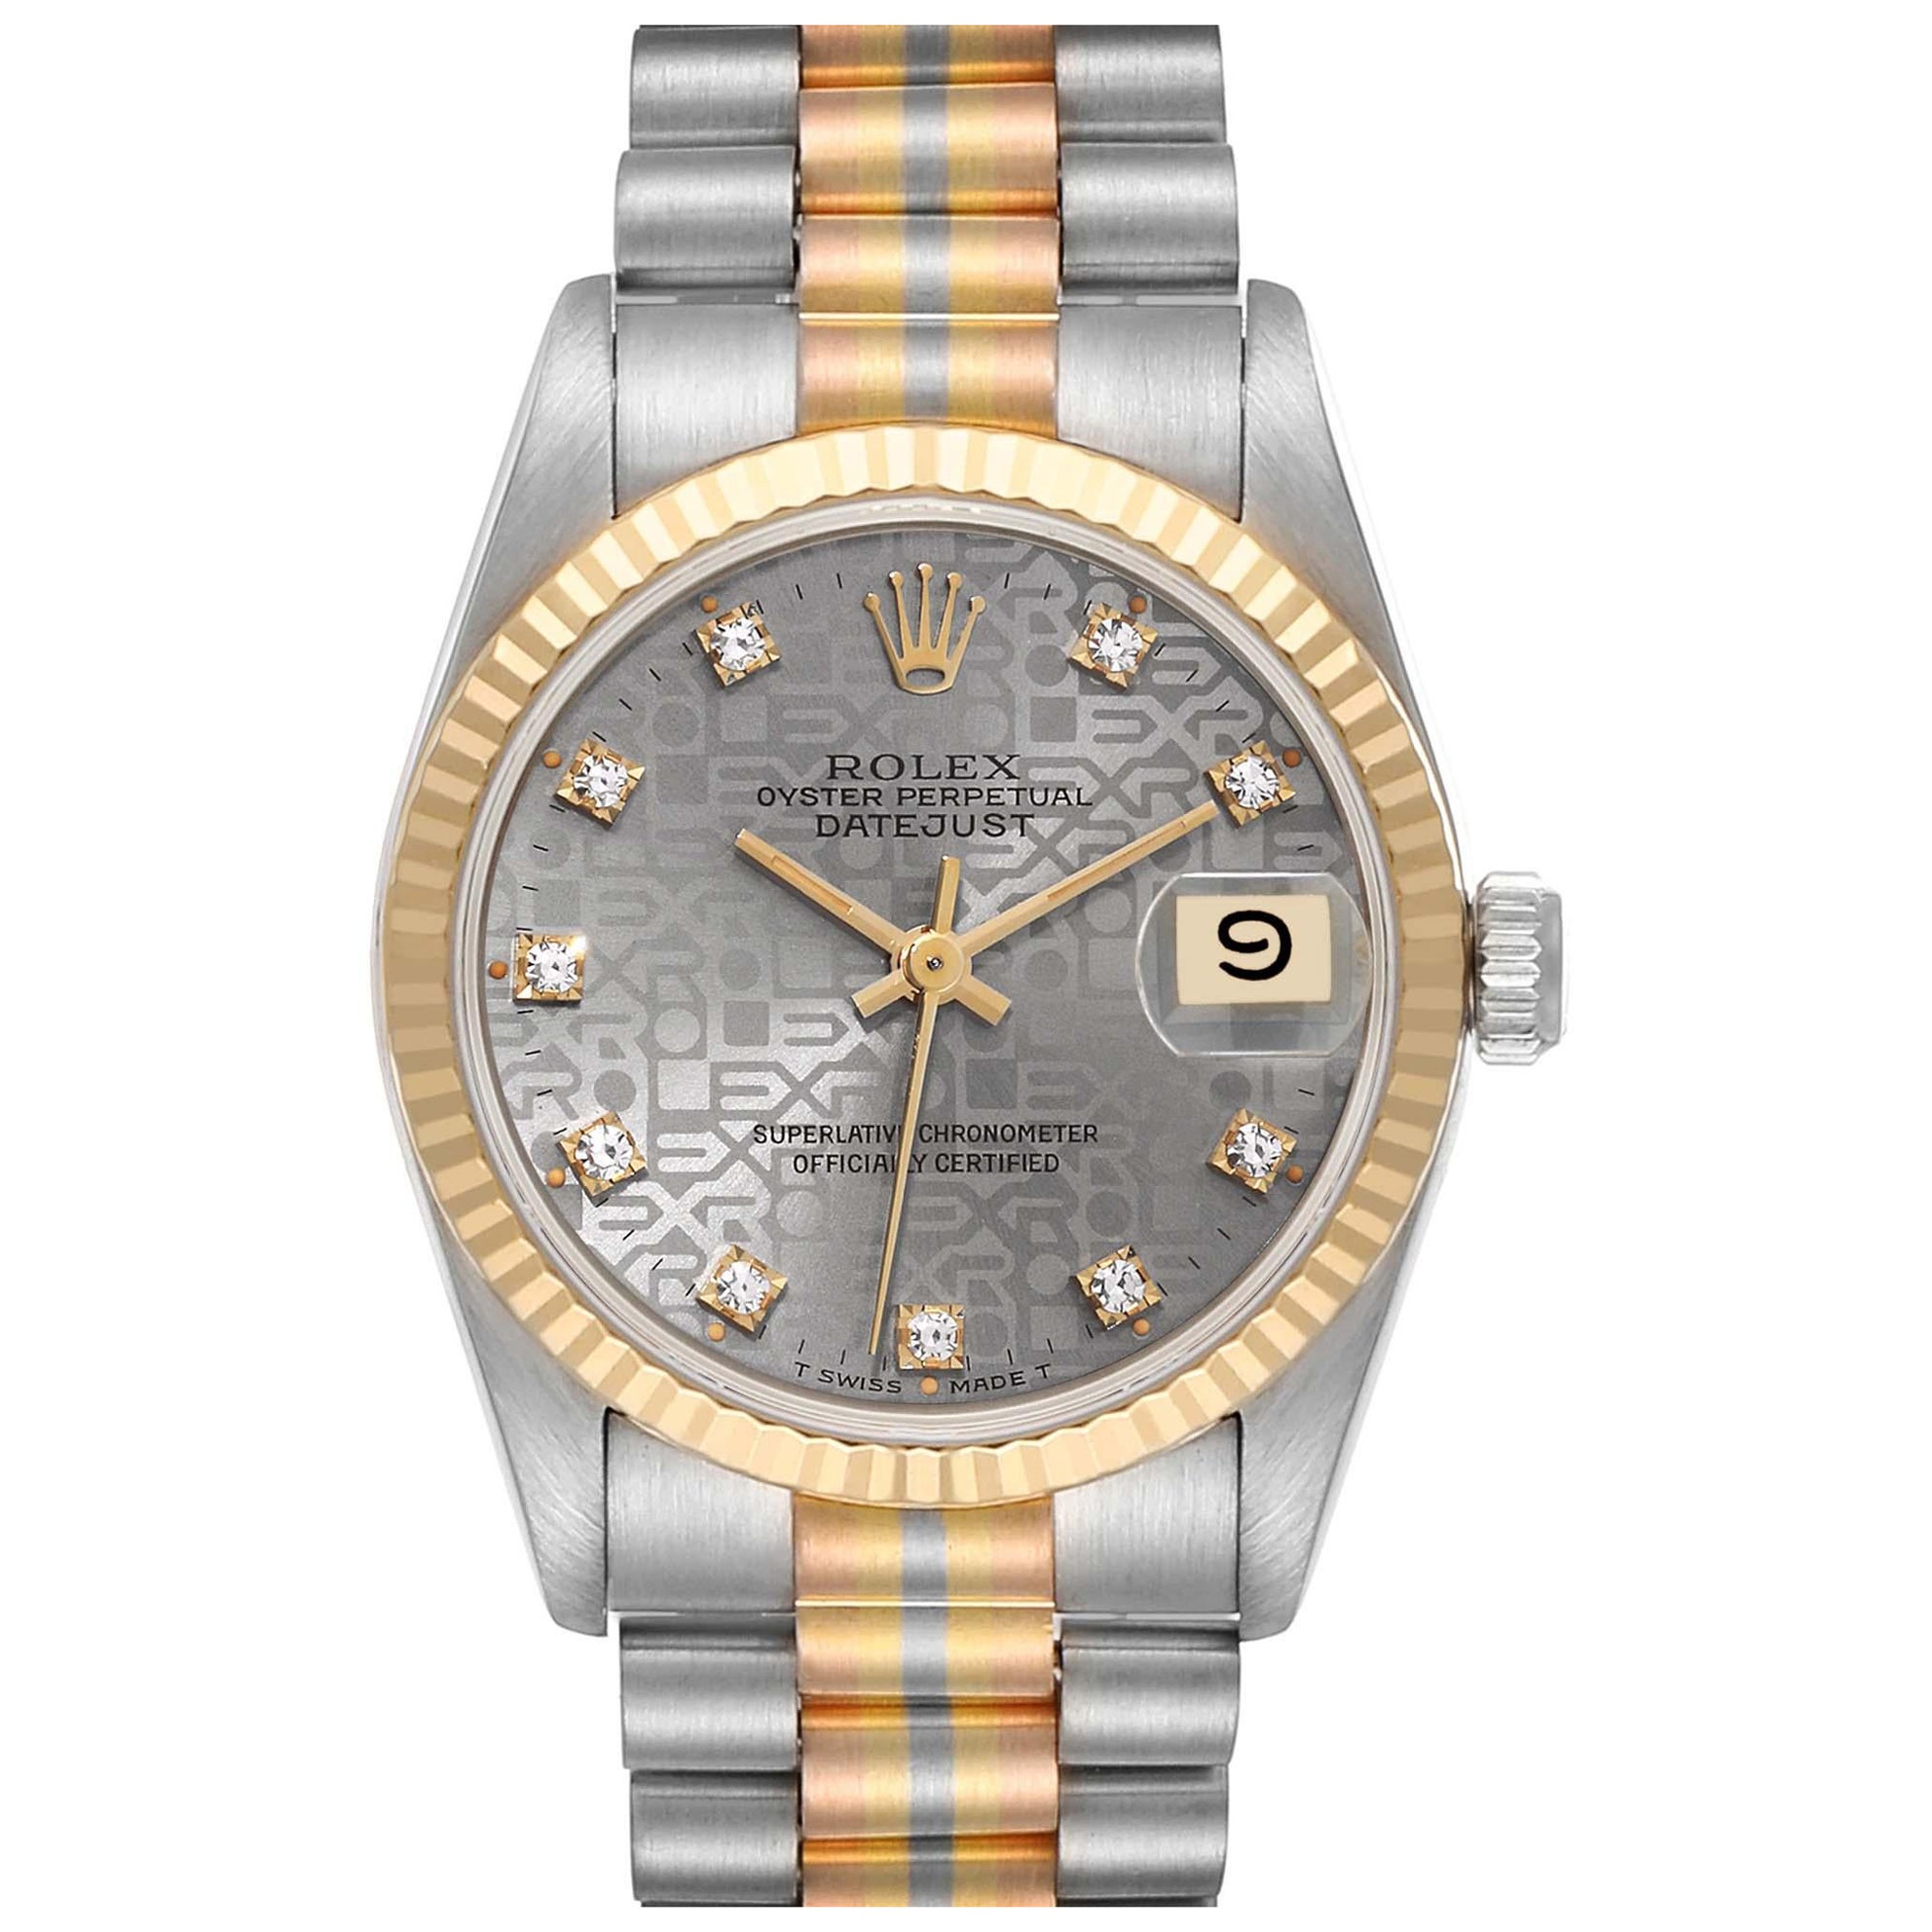 Rolex President Midsize Tridor White Yellow Rose Gold Diamond Ladies Watch 68279